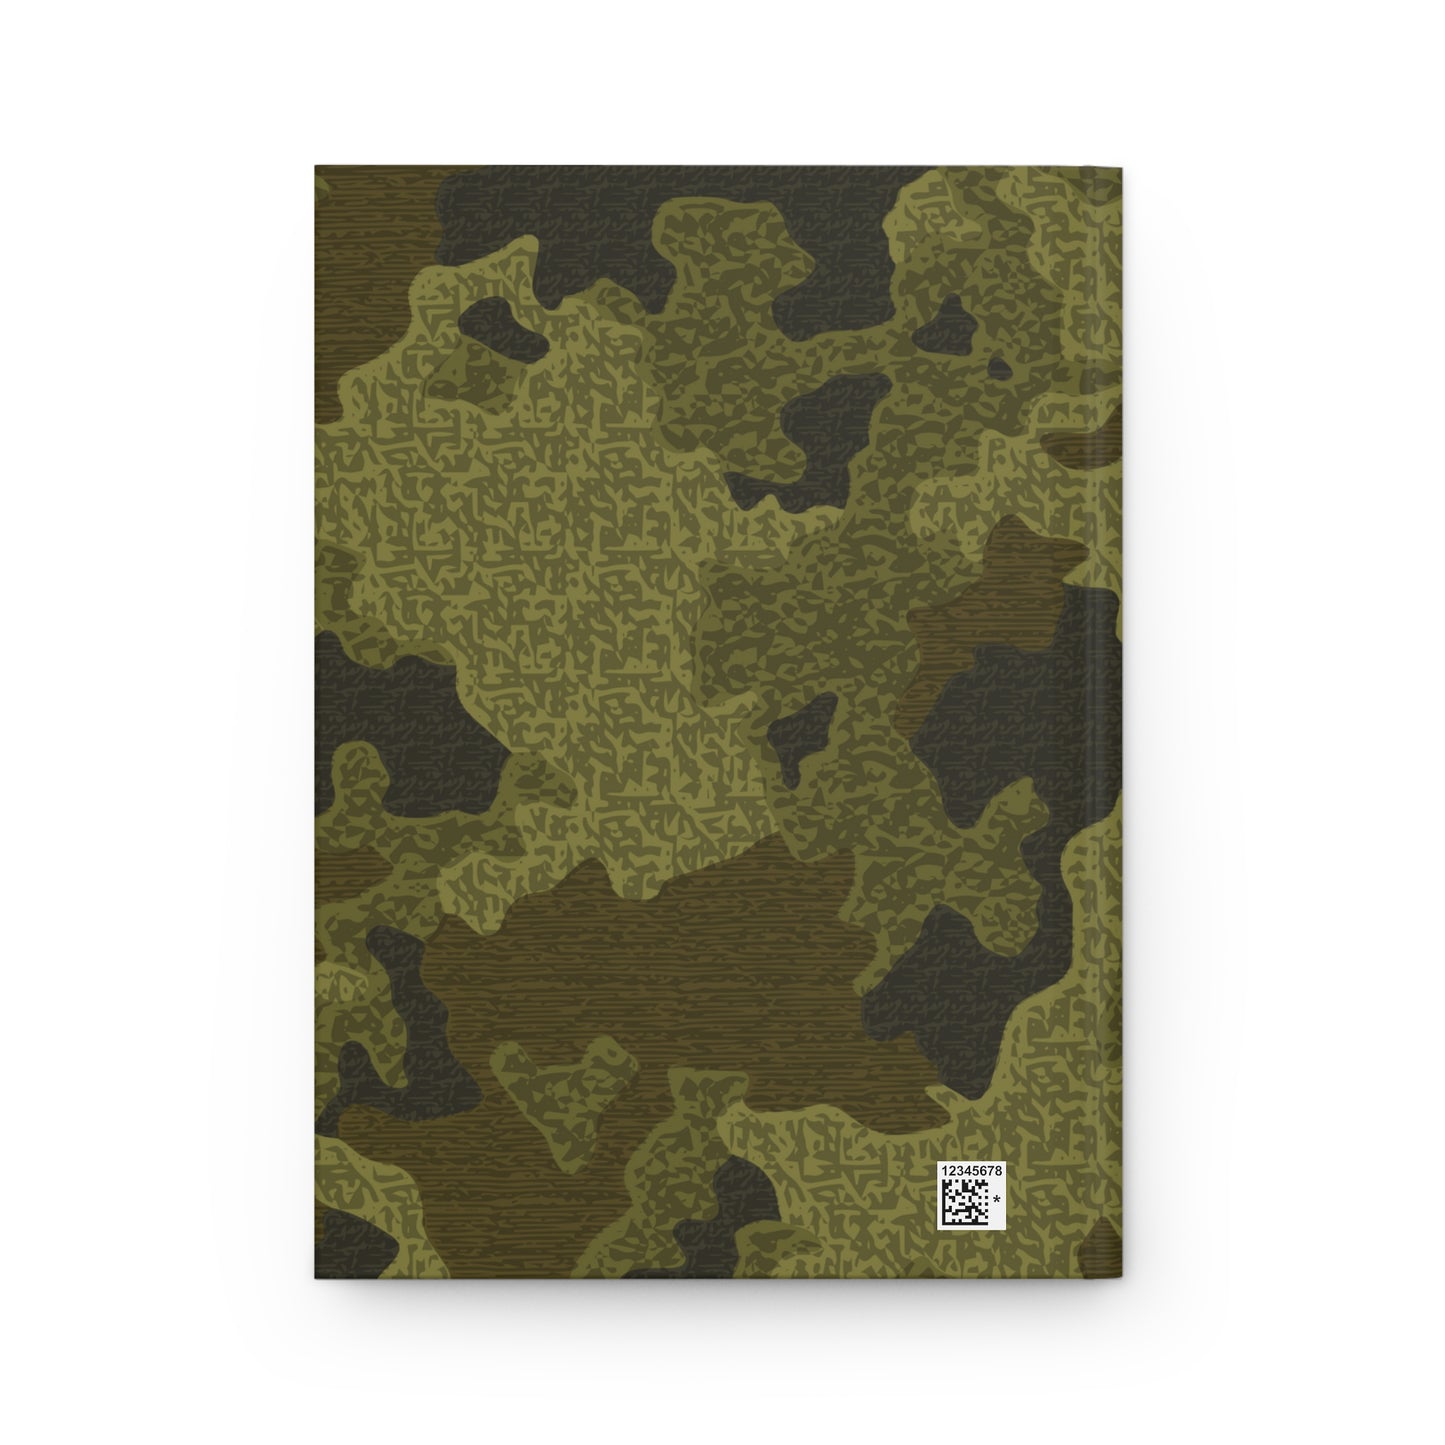 USINDOPACOM Army Element Colored DUI Hardcover Leader Book